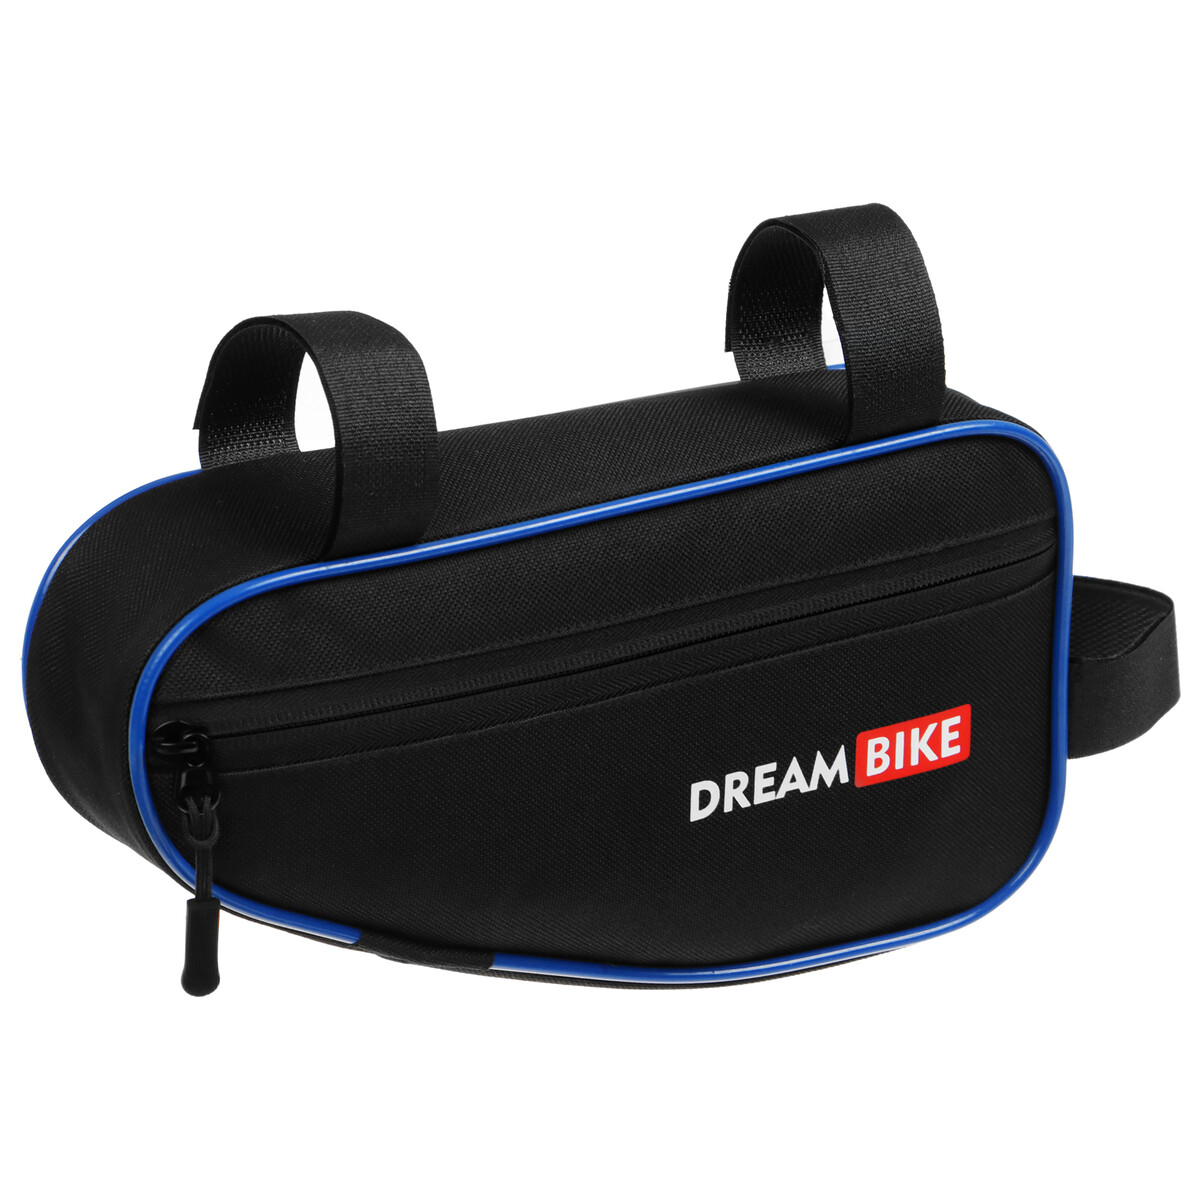 Велосумка dream bike под раму, 26х13.5х5, цвет черный/синий велосумка dream bike под раму 41х19х5 синий